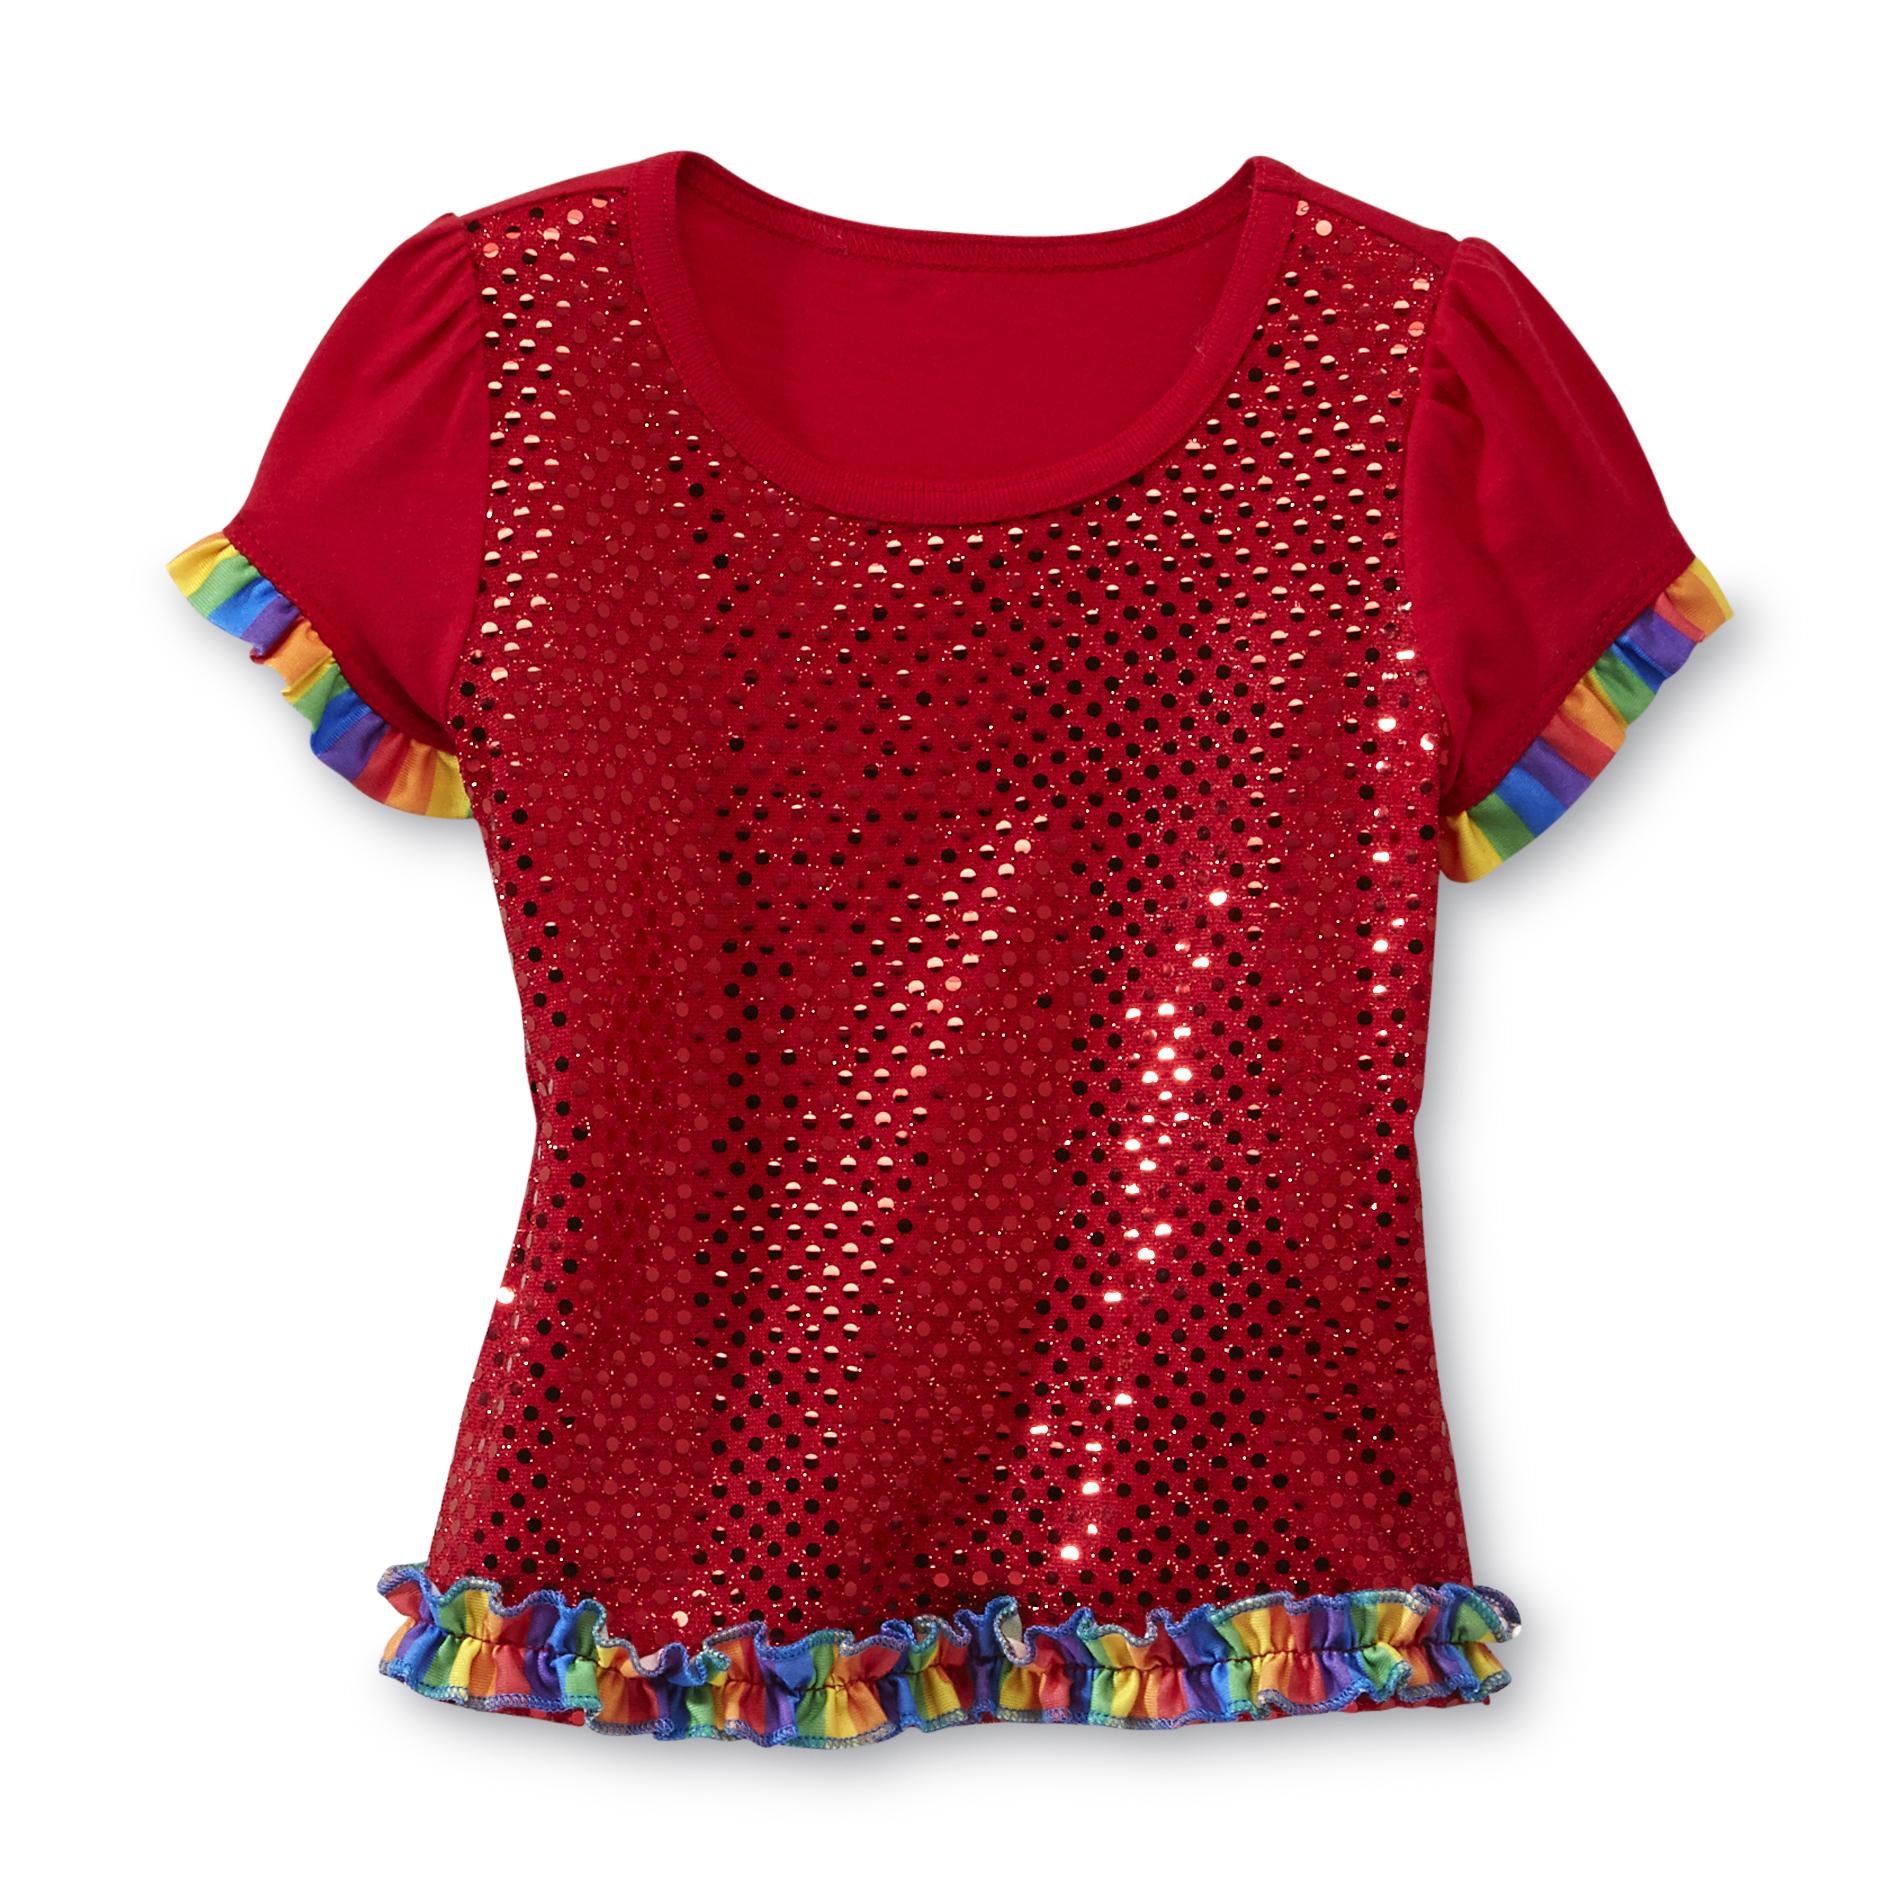 Piper Infant & Toddler Girl's Short-Sleeve Sequin Top - Rainbow